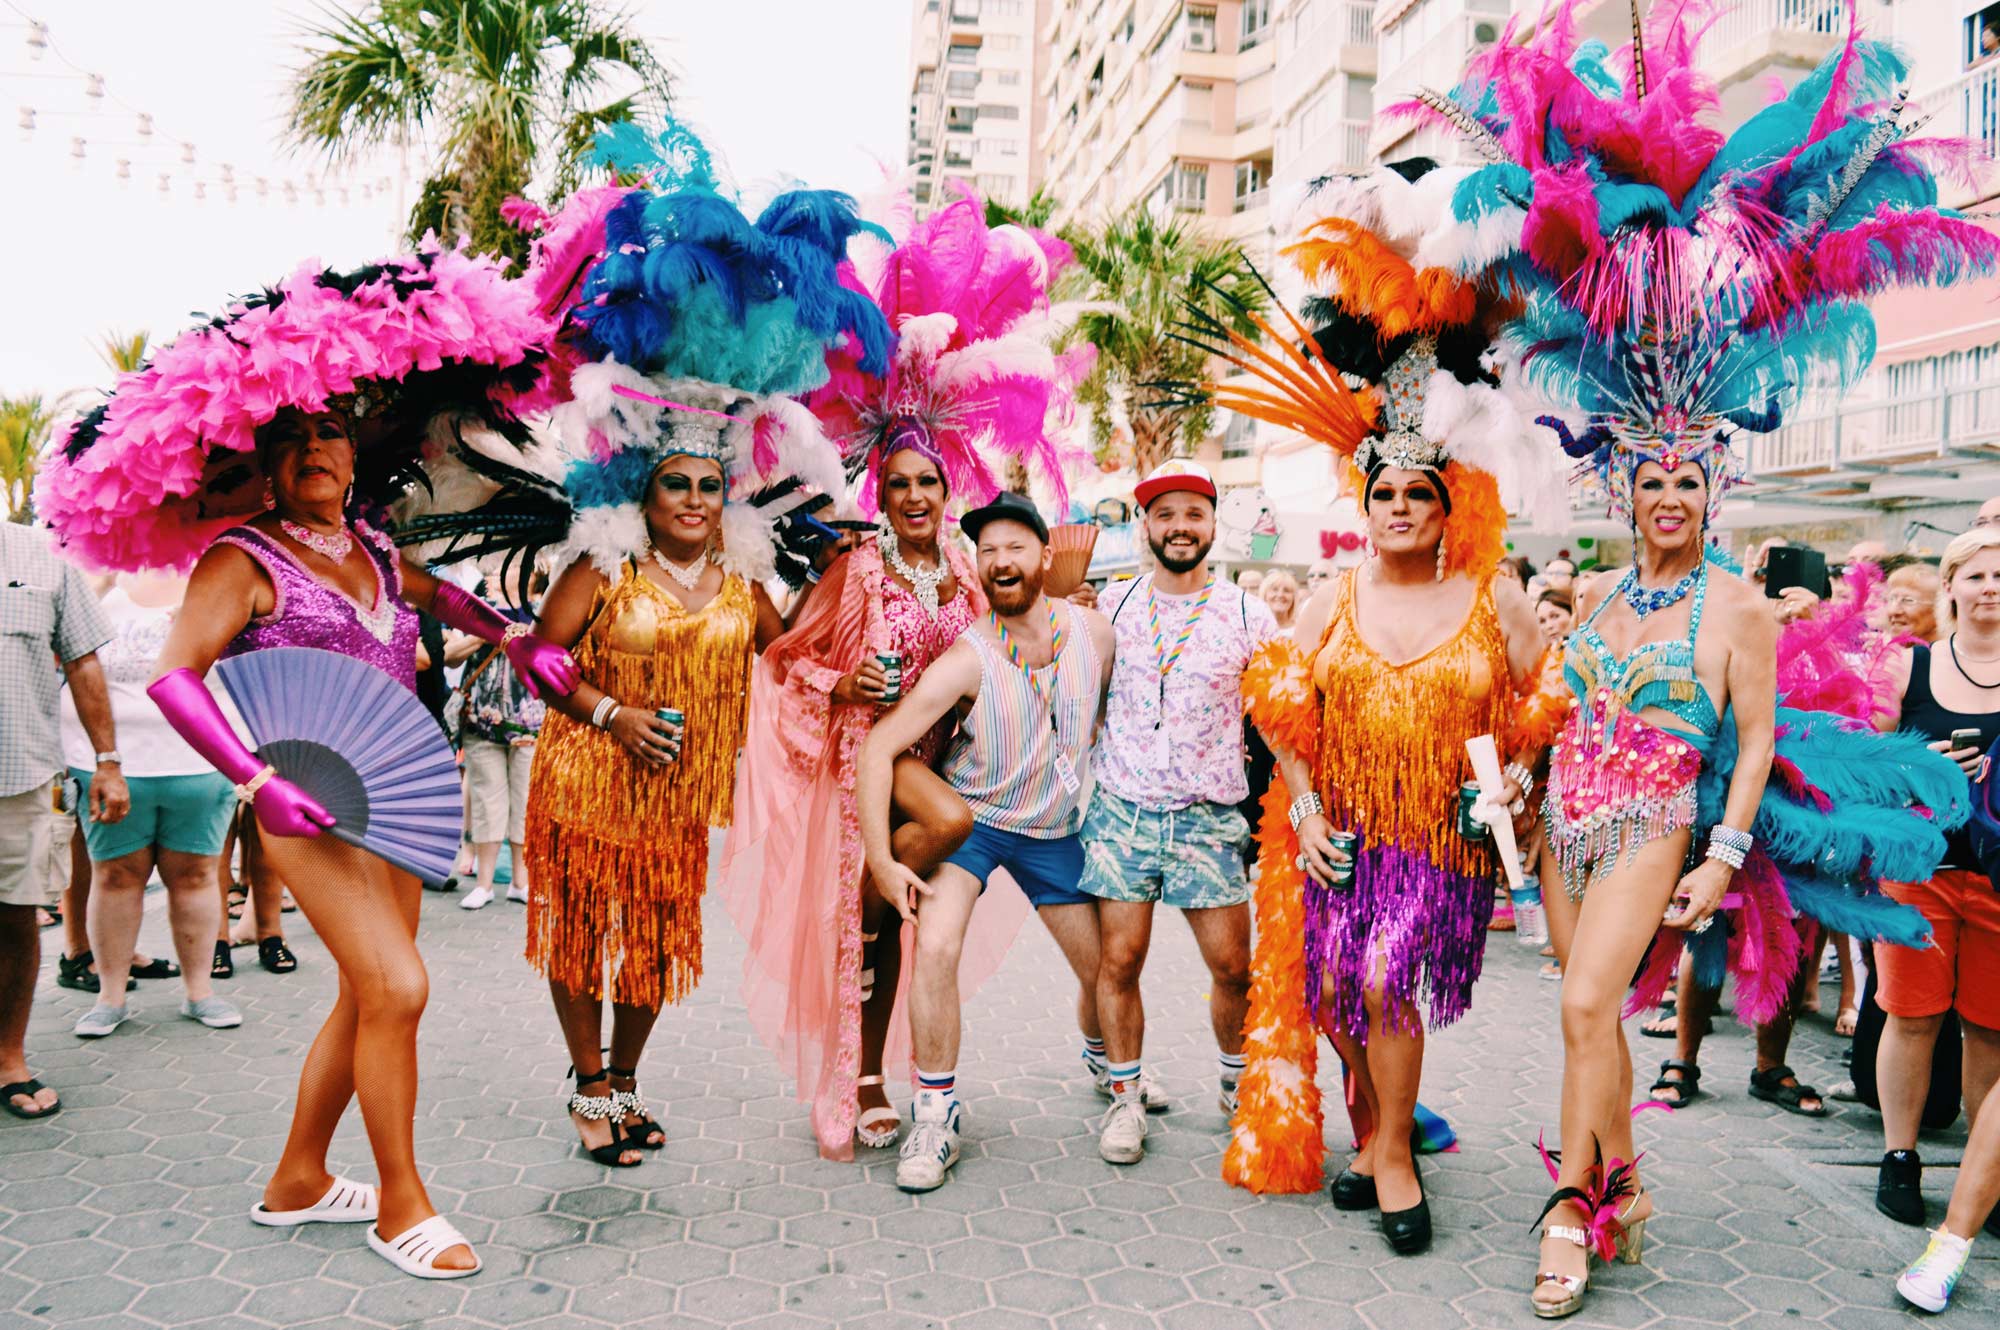 Benidorm LGBTQ+ Pride: Best of the Spanish Gay Rainbow Carnival